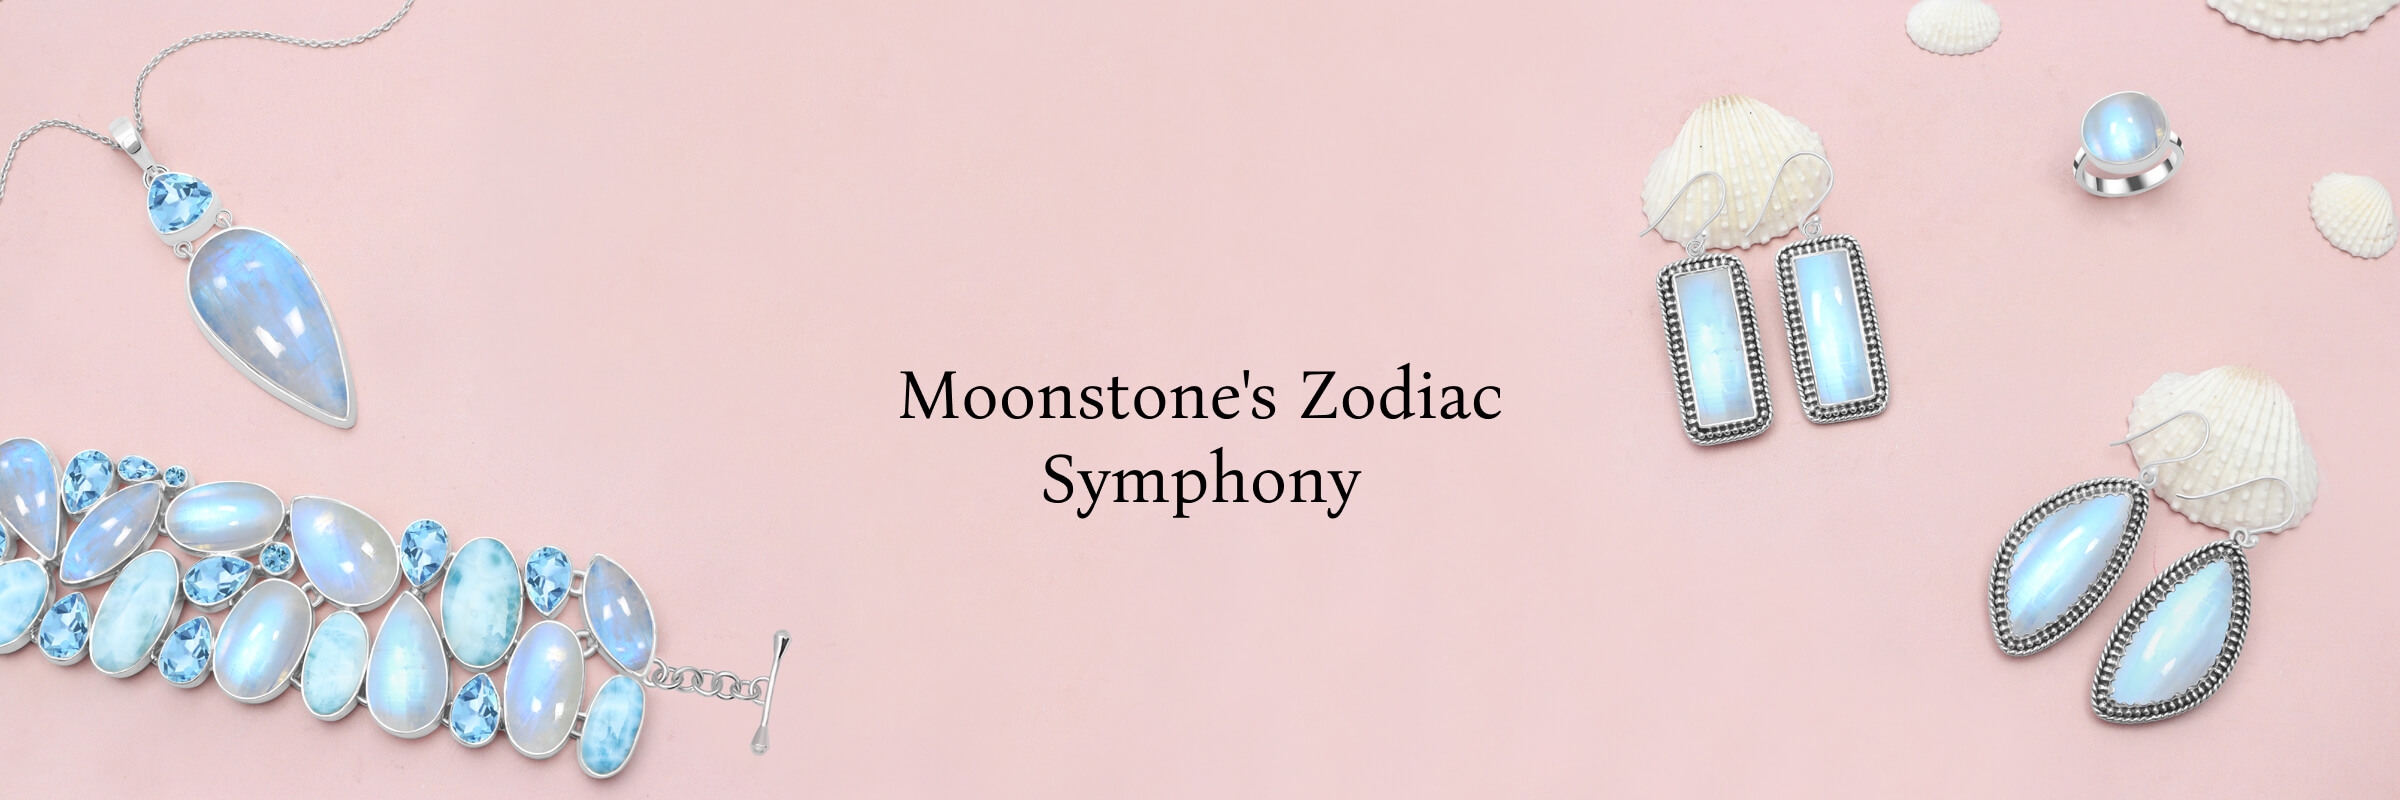 Zodiac sign of Moonstone